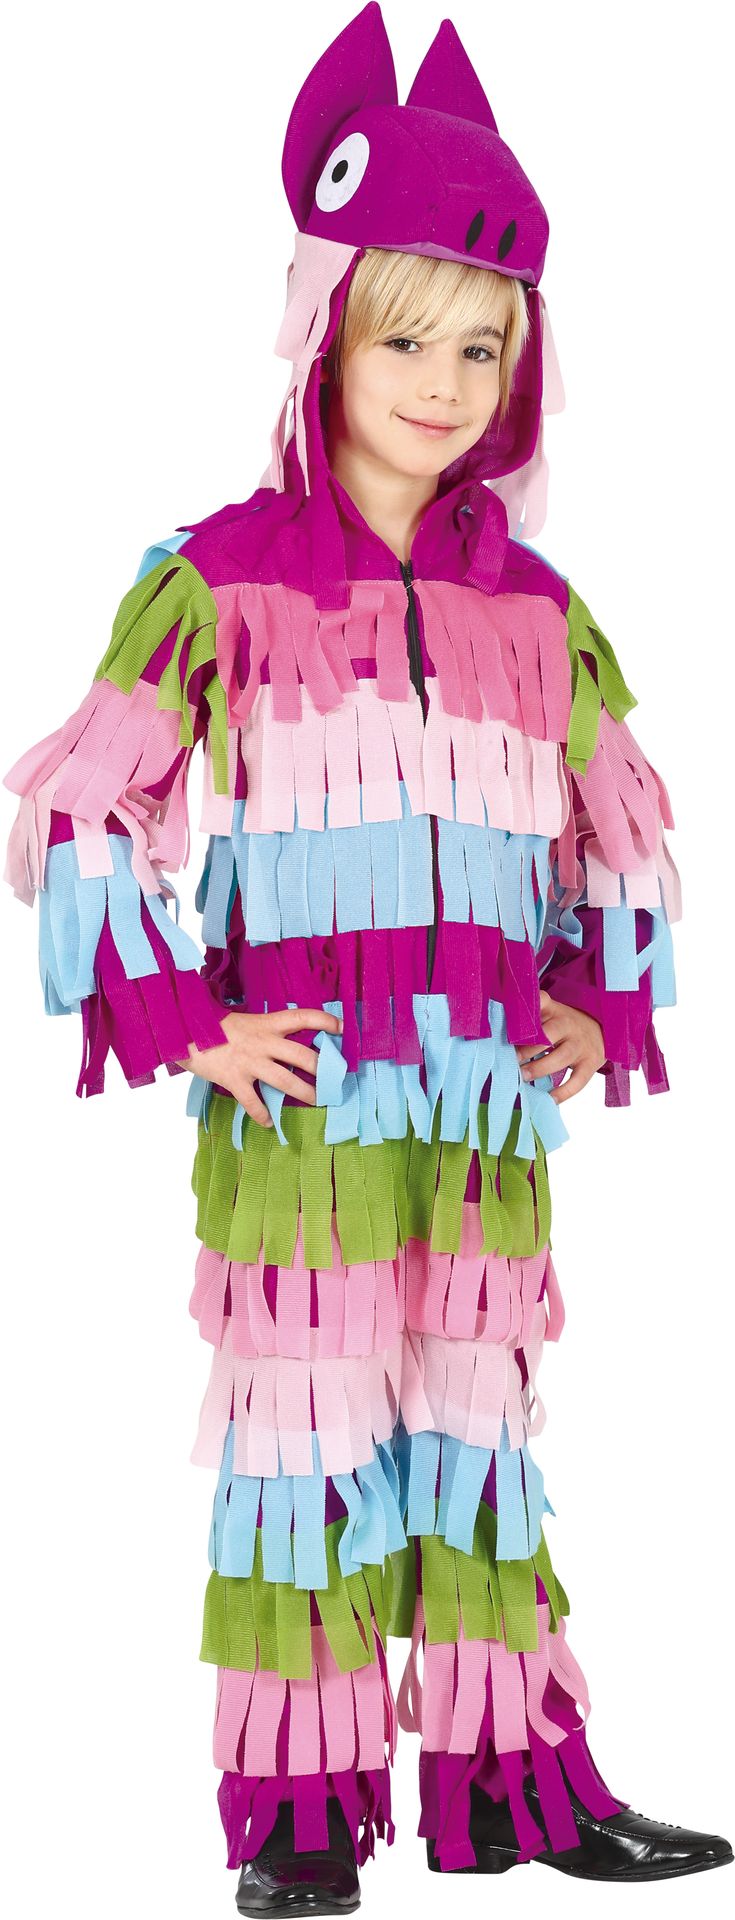 Fortine Lama Piñata outfit kind